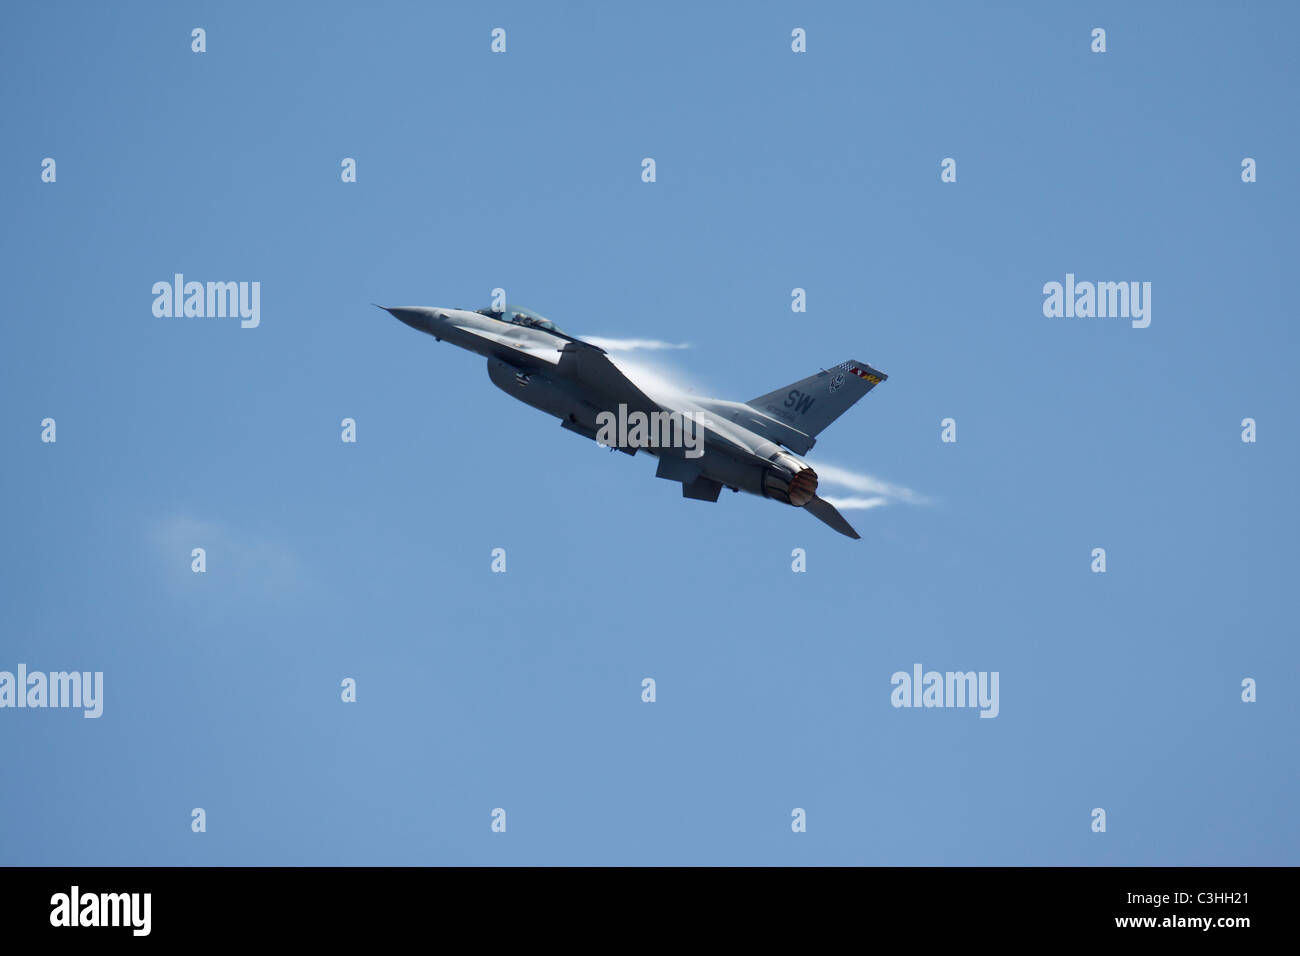 A Lockheed Martin F-16 fighting falcon in flight. Stock Photo